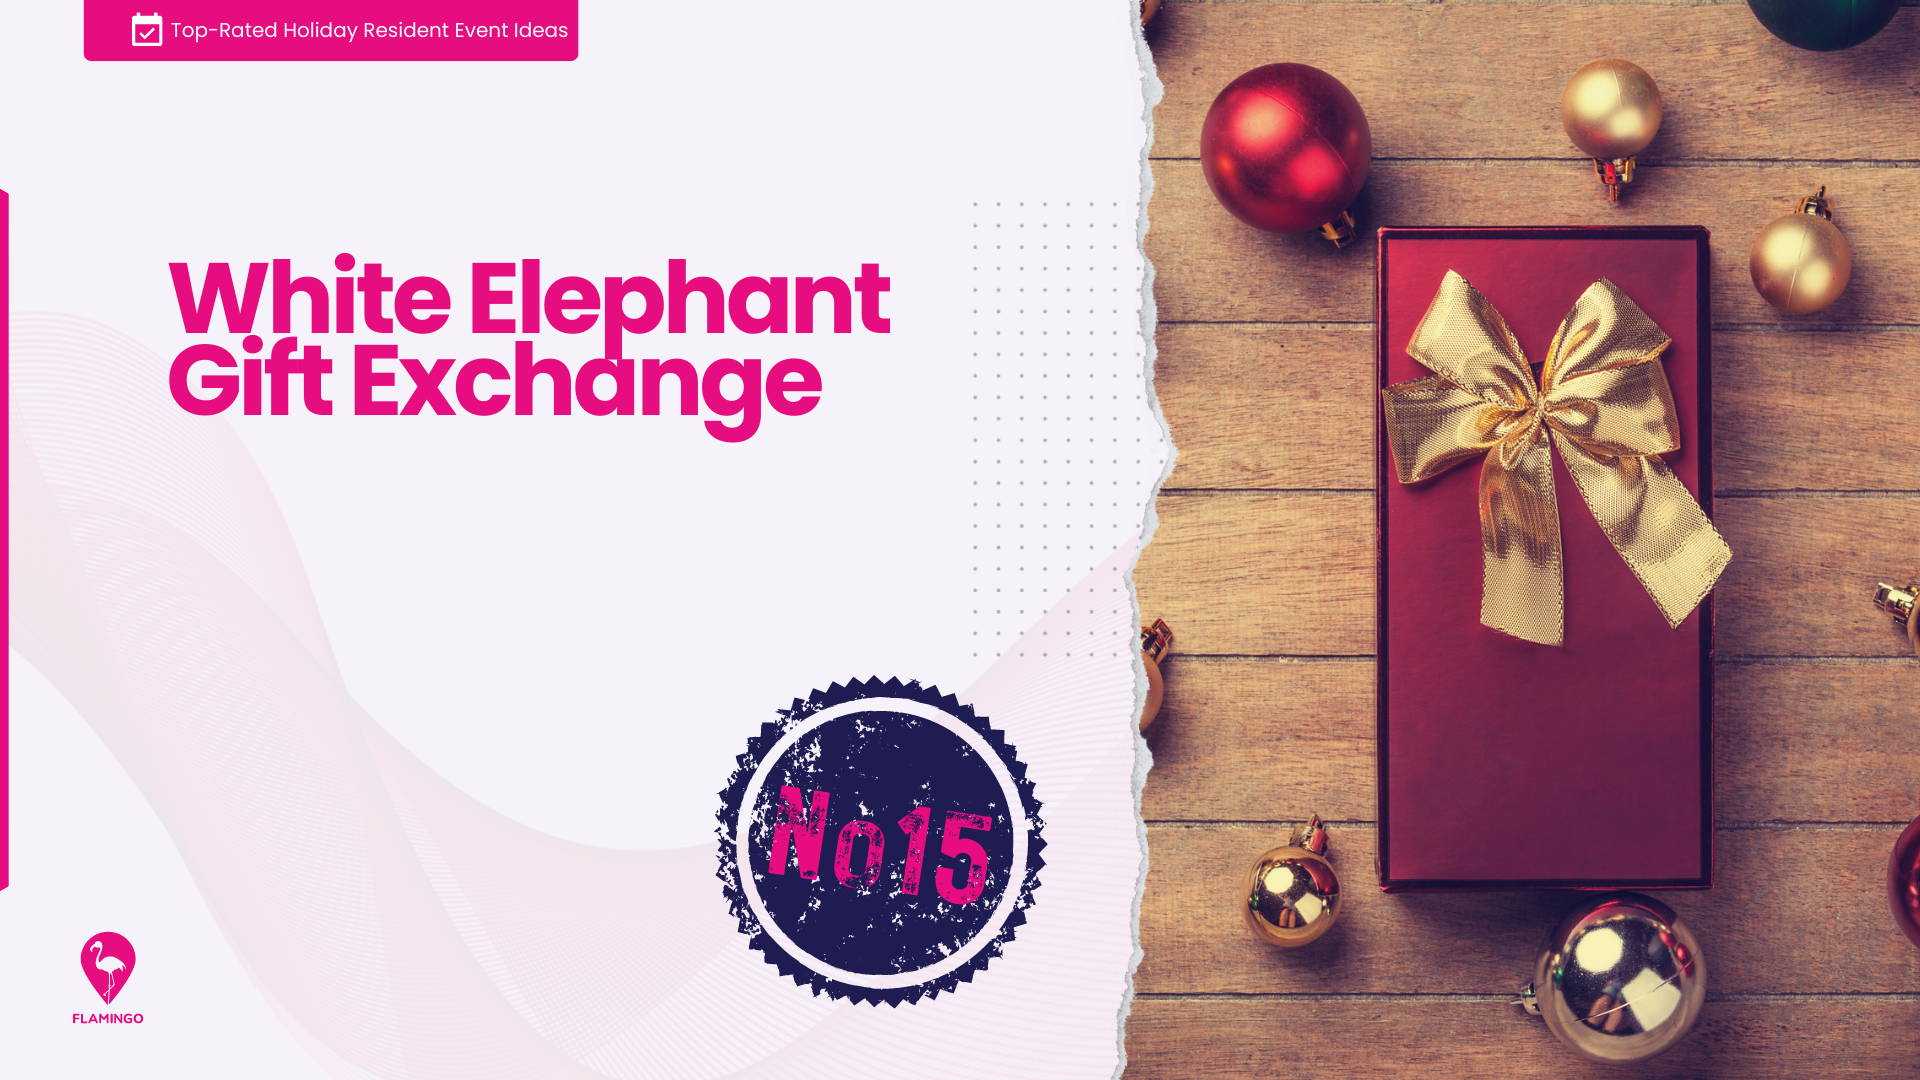 White Elephant Gift Exchange Holiday Resident Event Idea